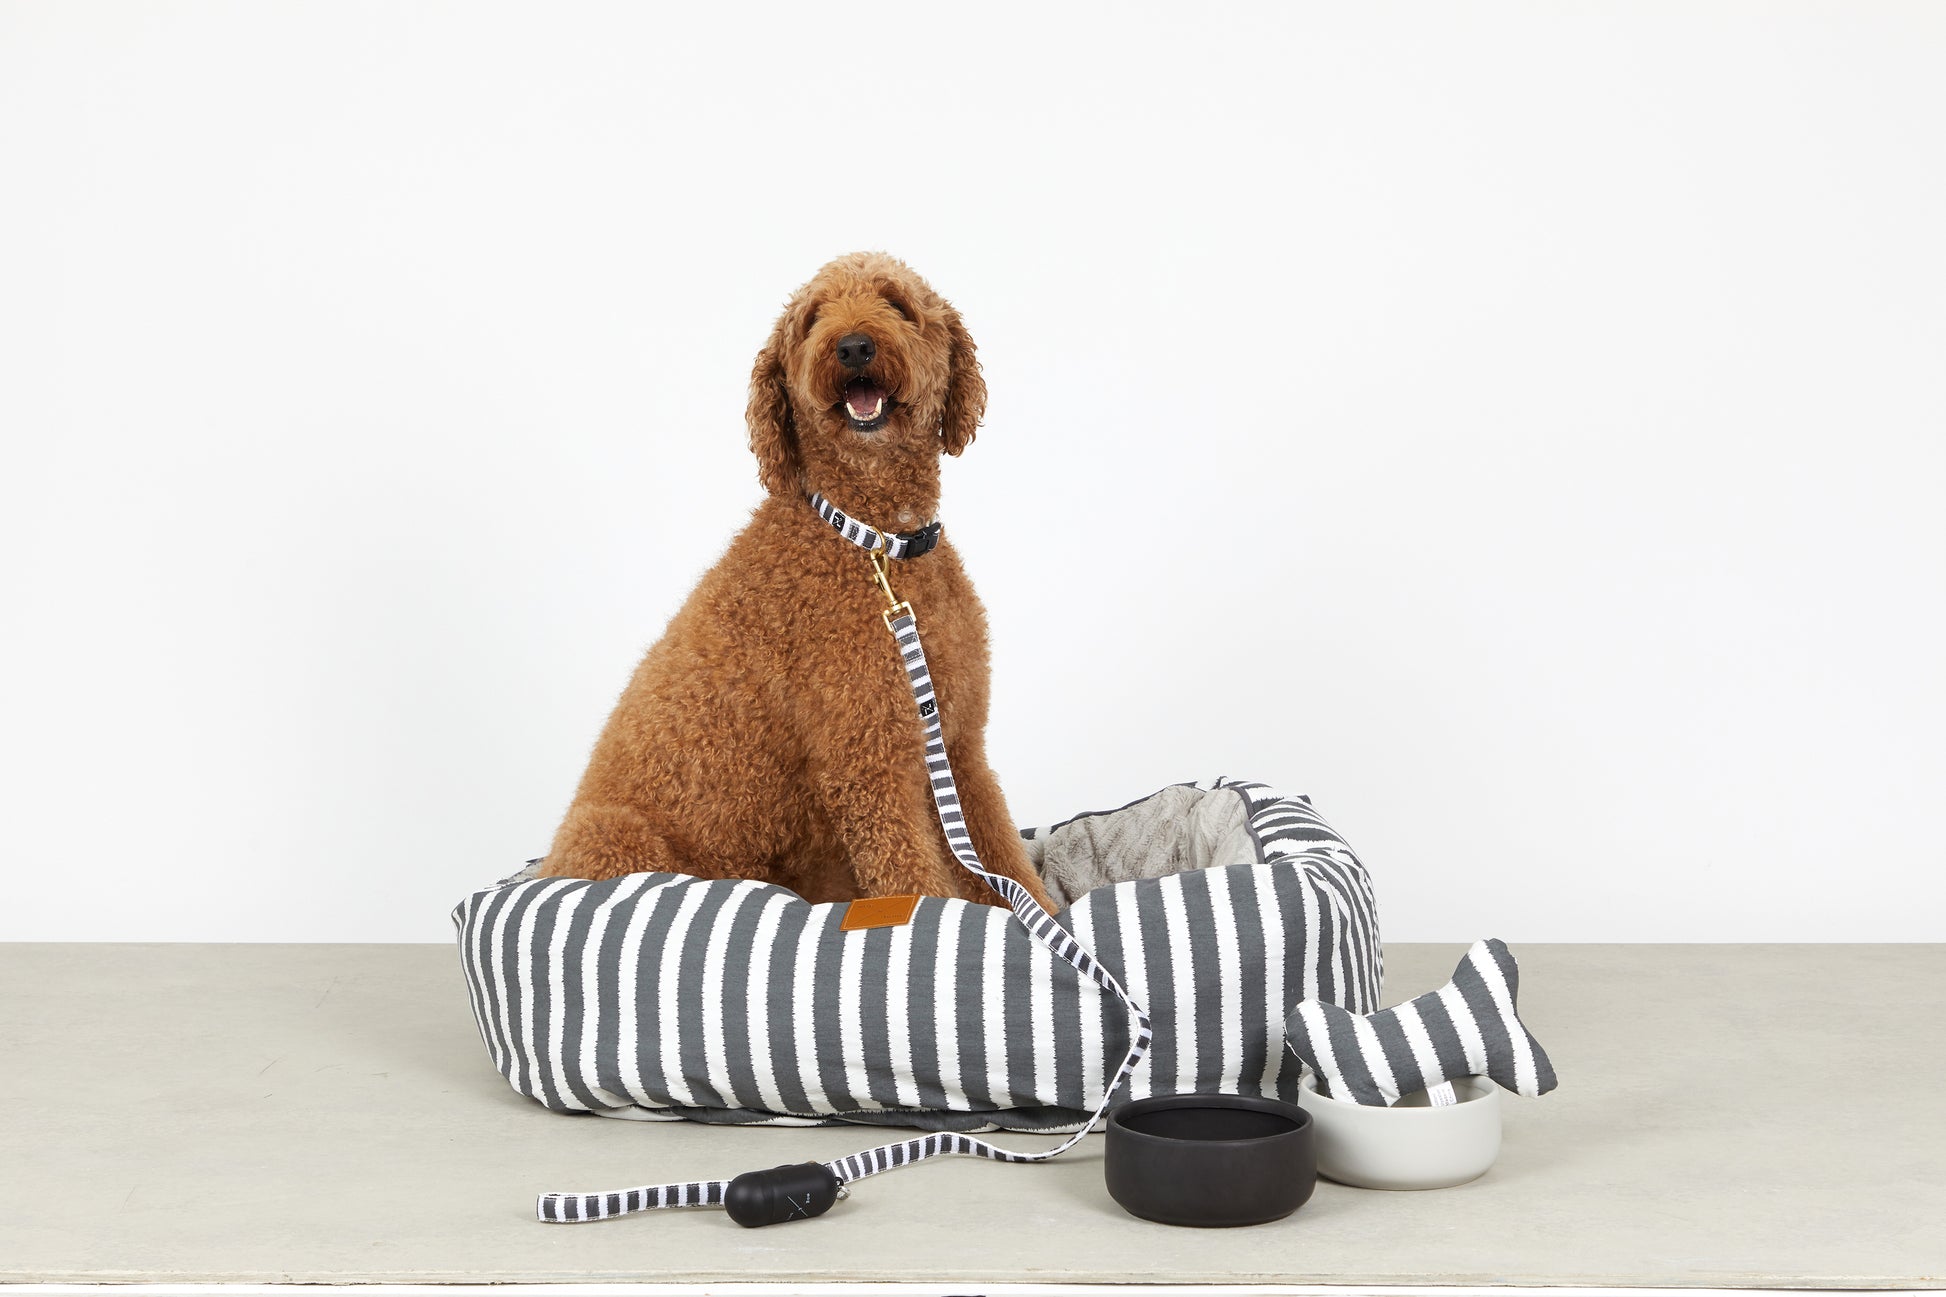 Mog and Bone Classic Hemp Dog Lead, Hemp Dog Collar, Four Season Reversible Dog Bed, Dog Bone Toy, Ceramic Dog Bowls - Charcoal Hamptons Stripe Print